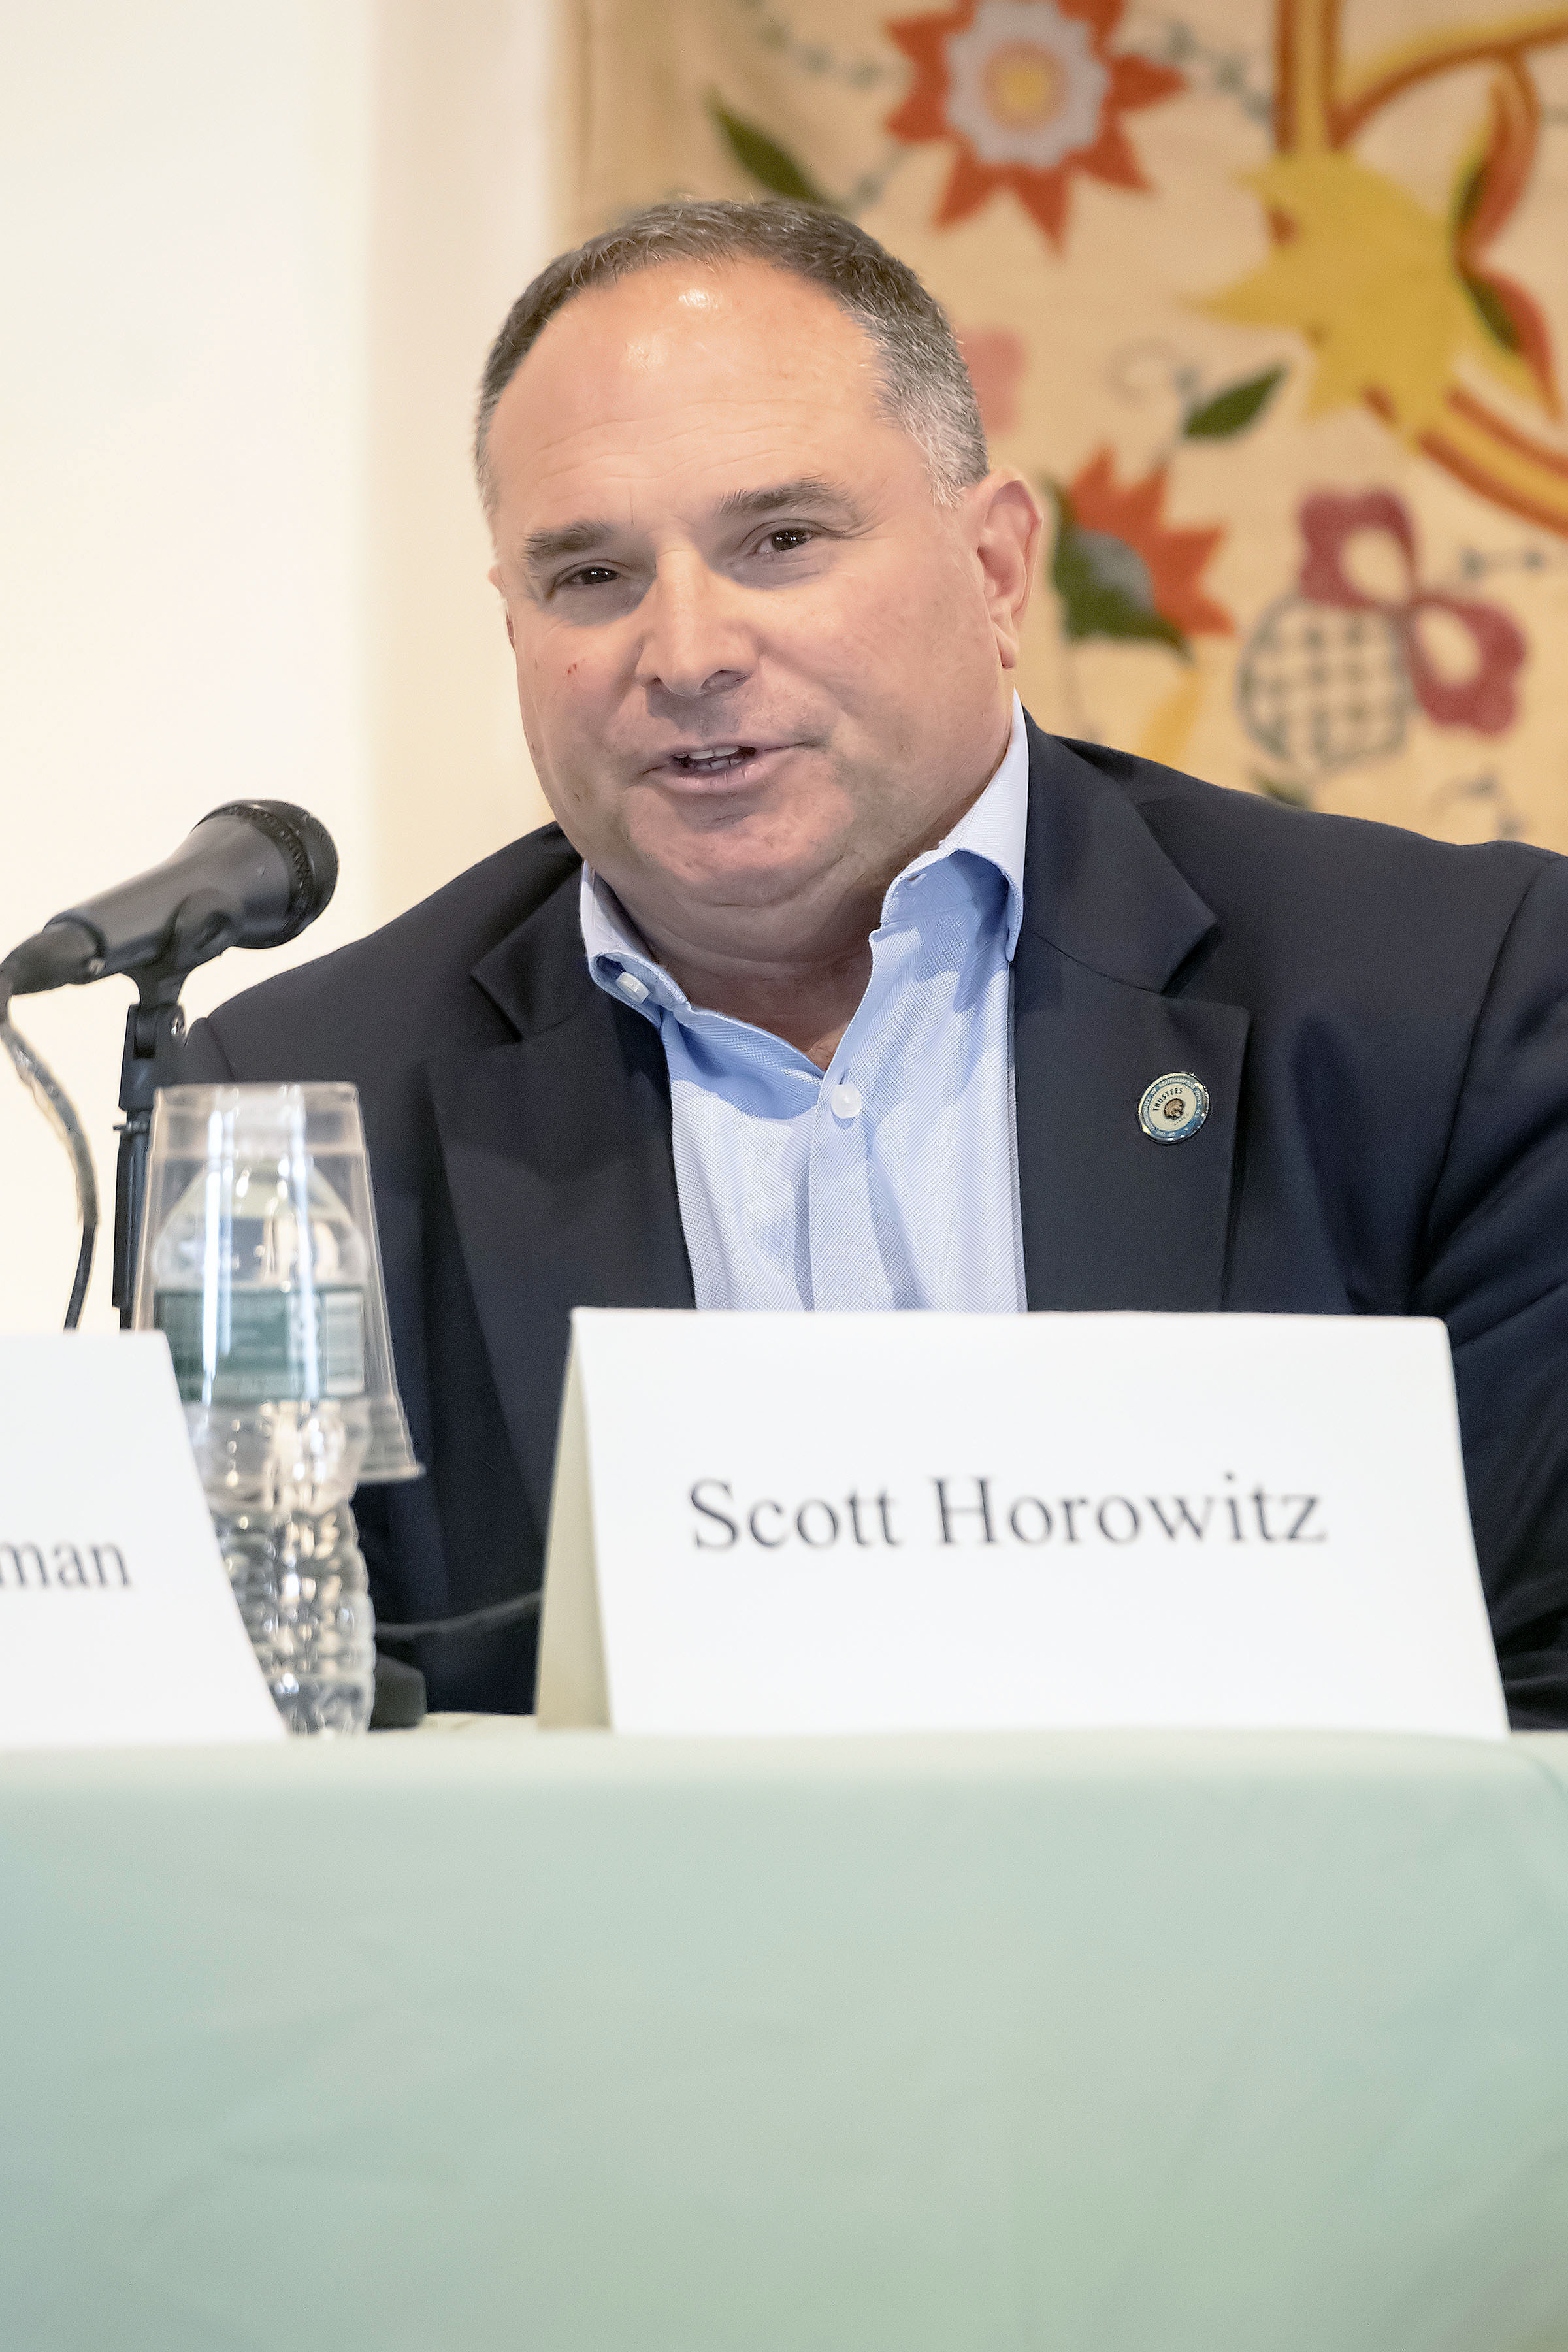 Southampton Town Trustee Candidate Scott Horowitz.  MICHAEL HELLER